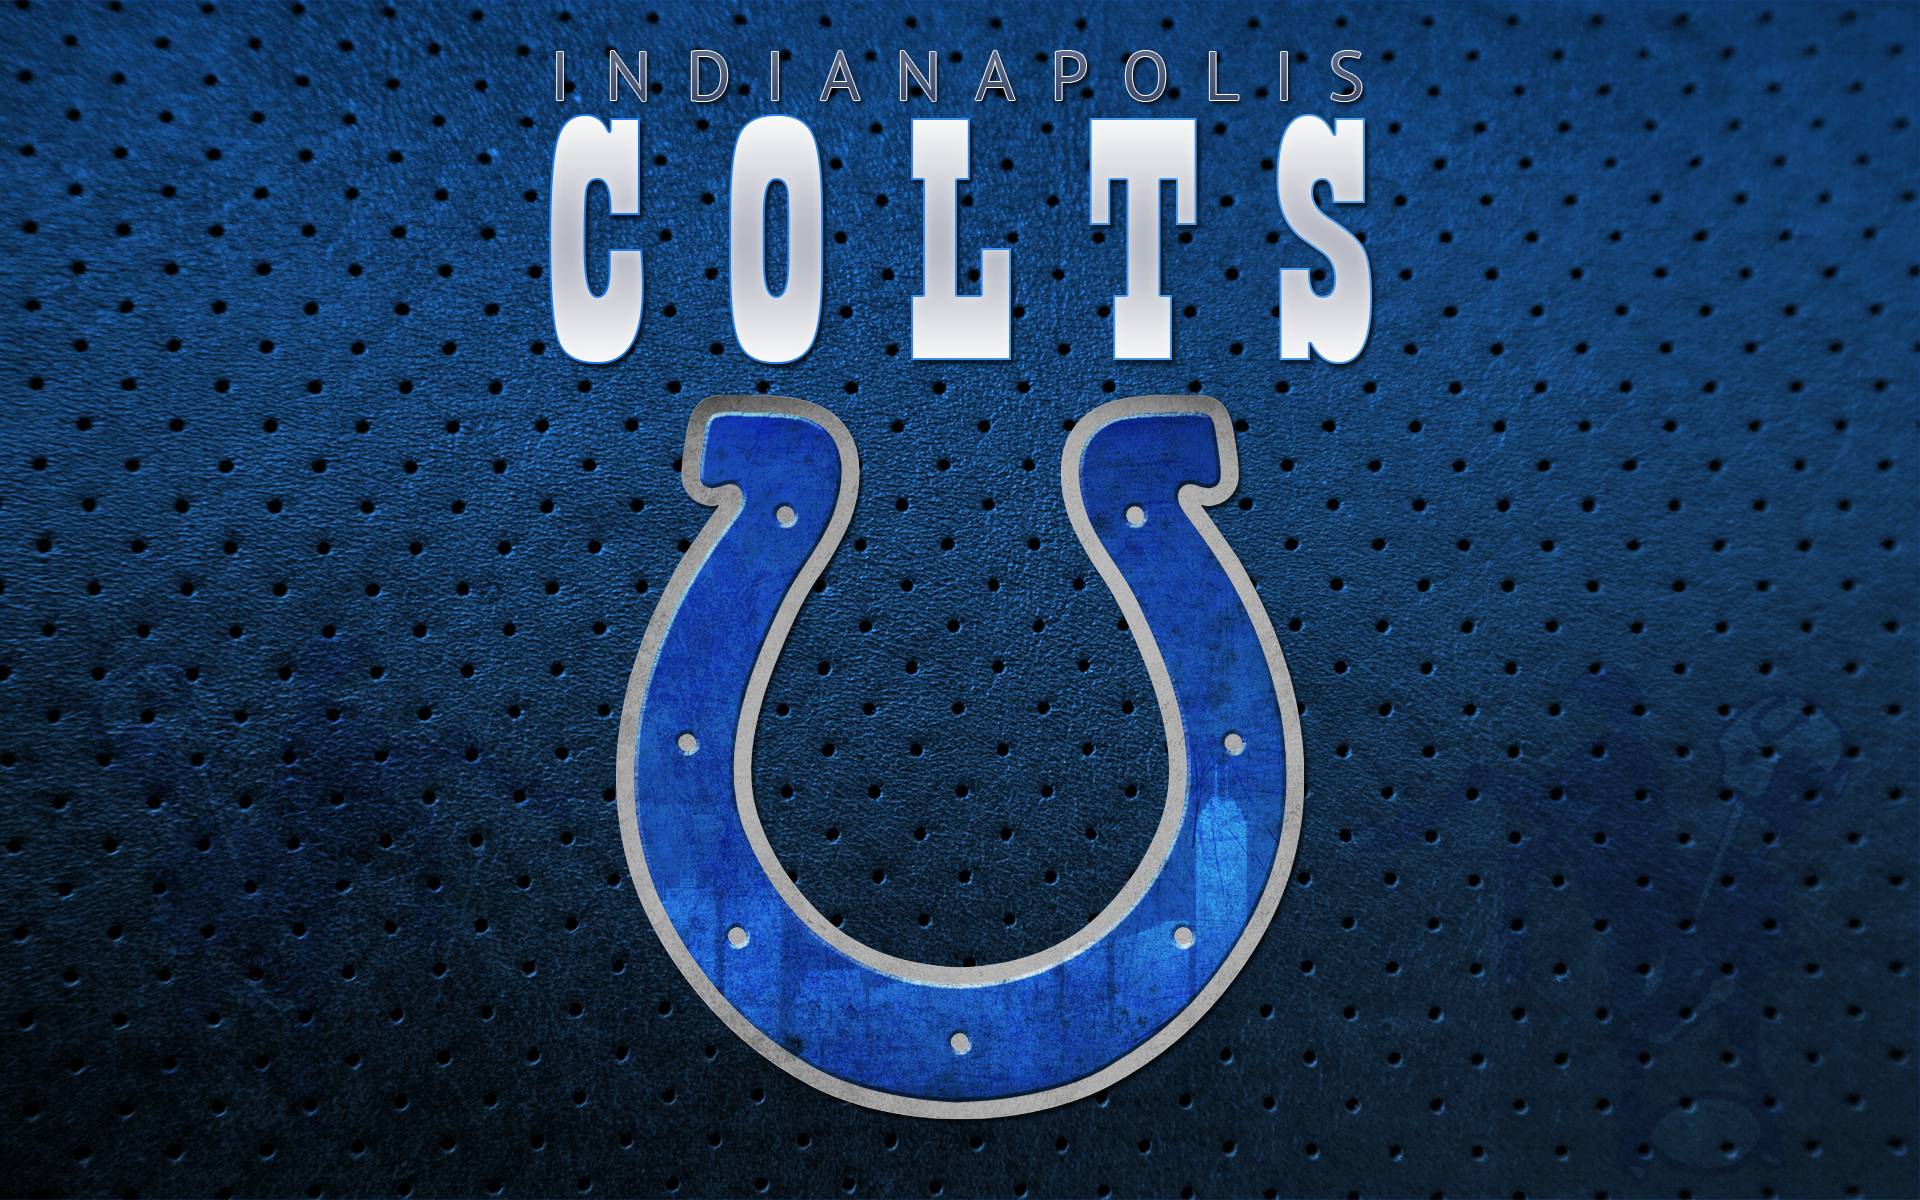 Indianapolis Colts Logo Wallpaper. Adam Lucas Designs